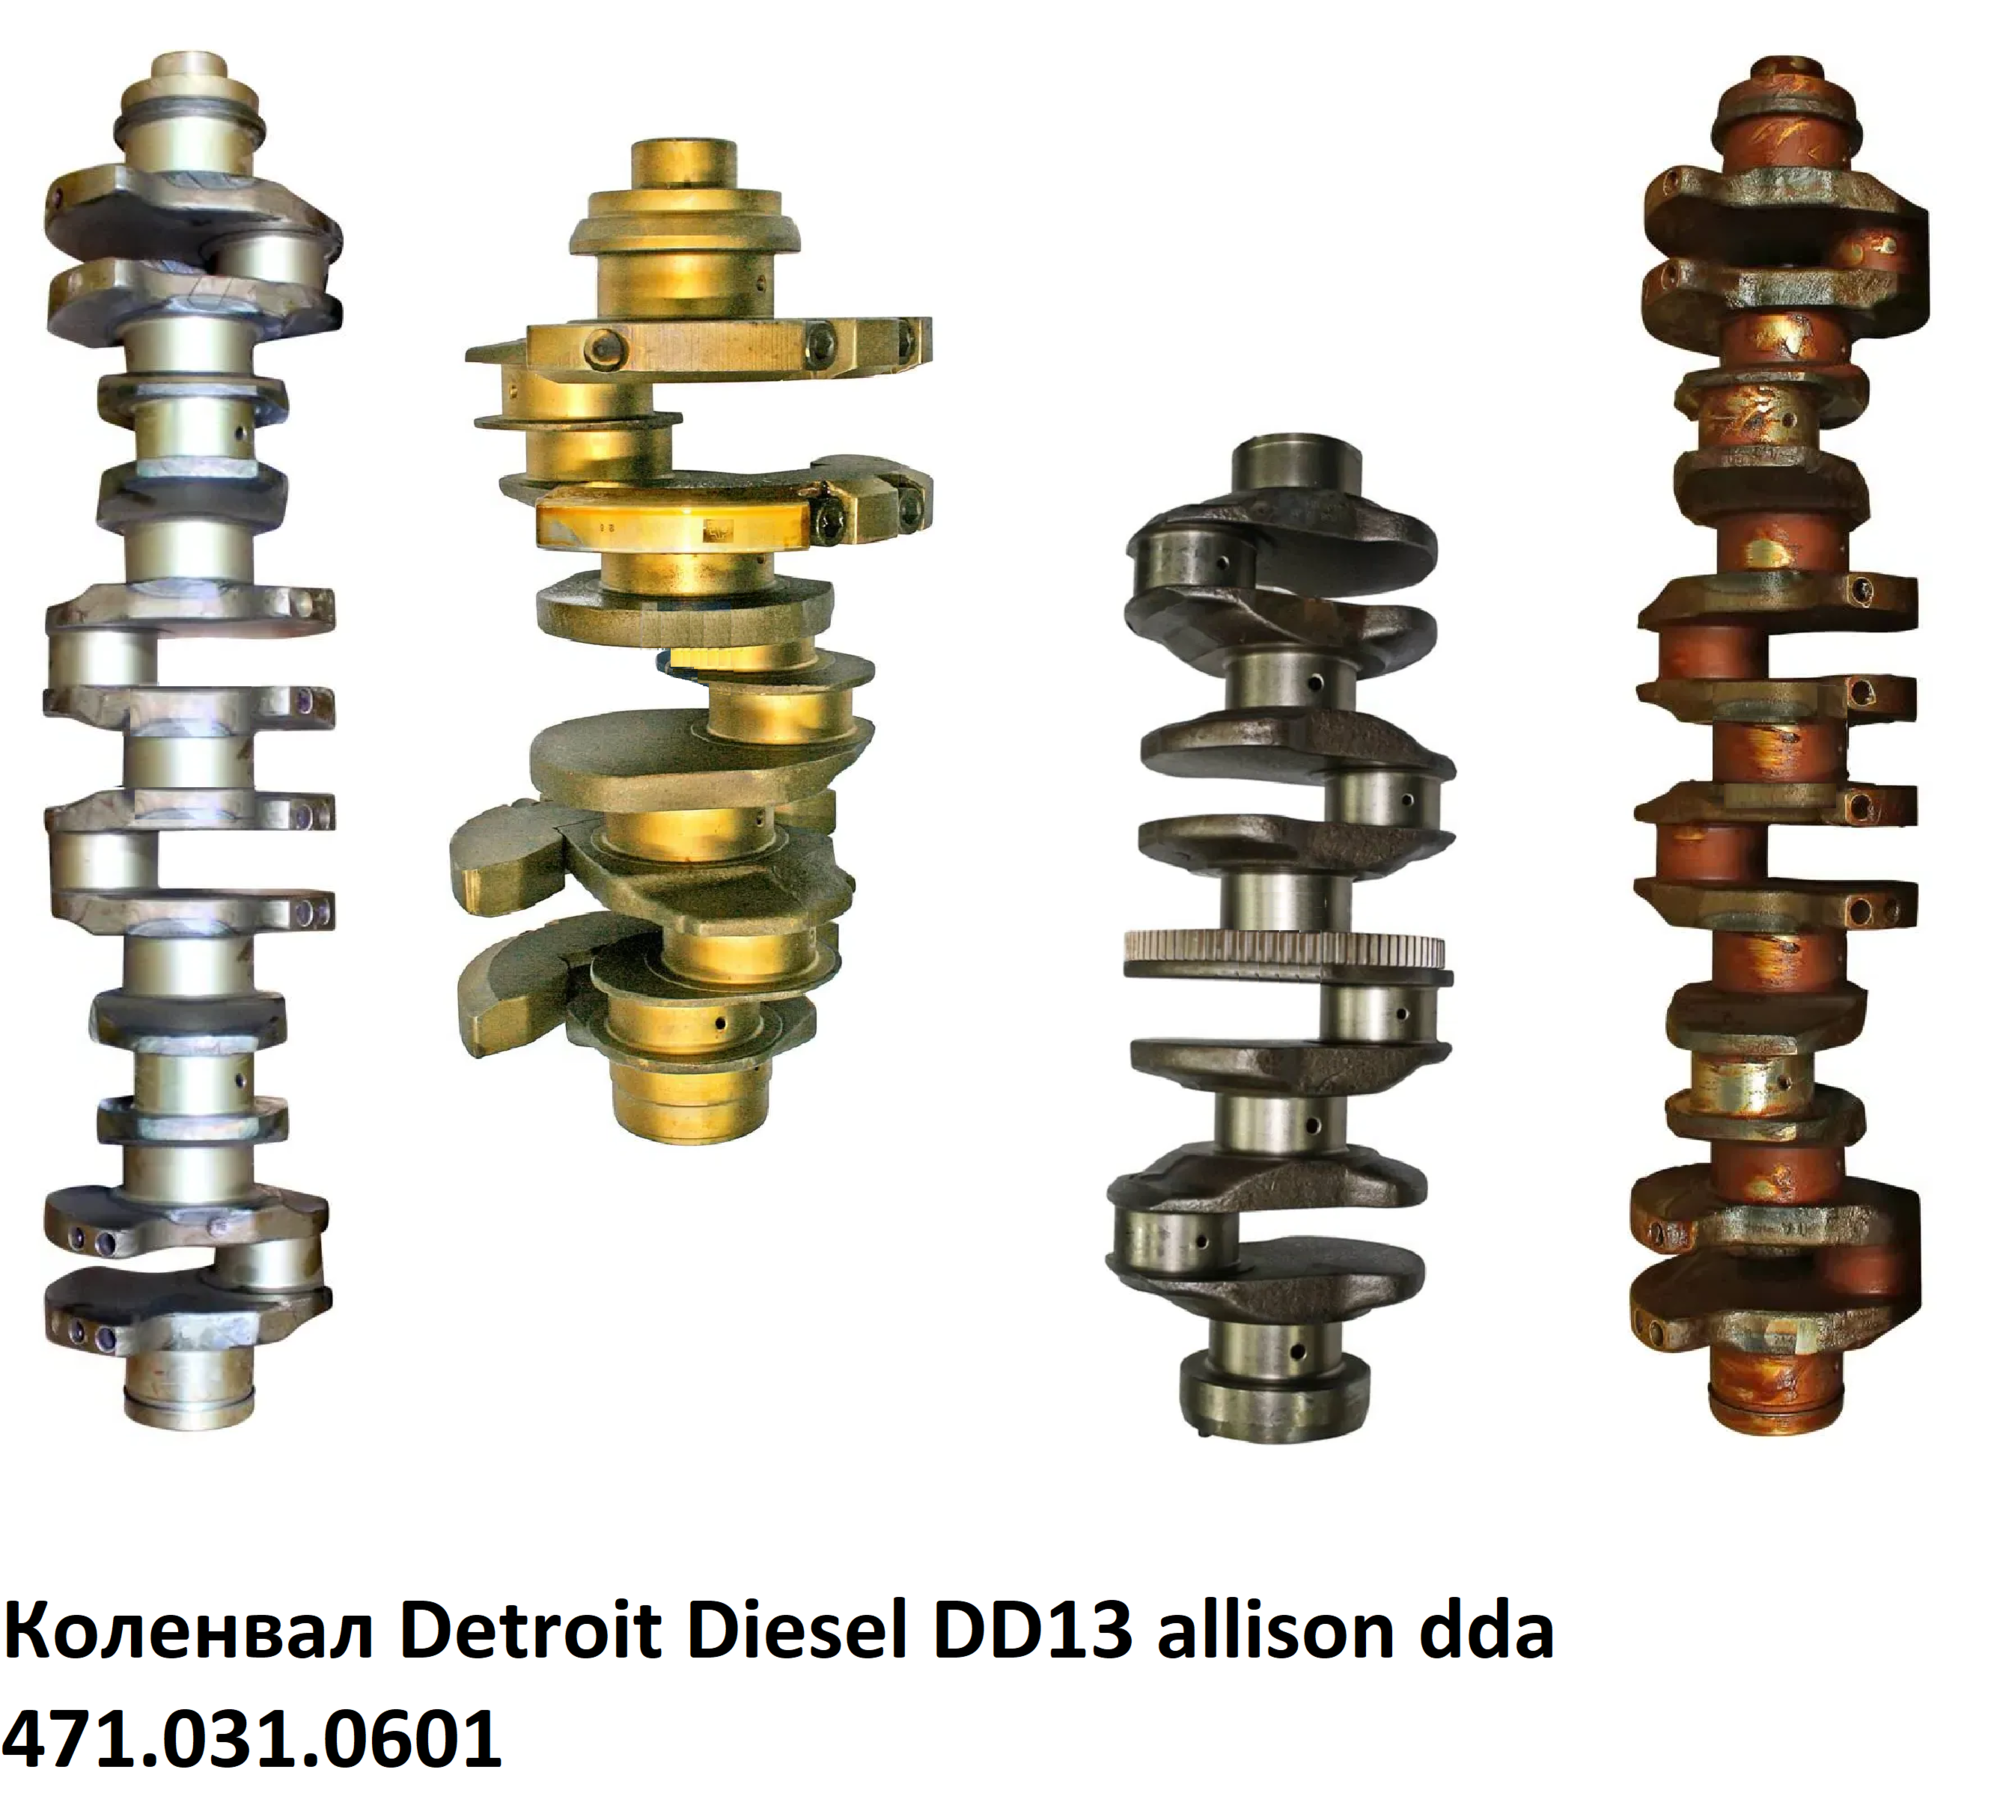 Коленвал Detroit Diesel DD13 allison dda 471.031.0601, 4710310601